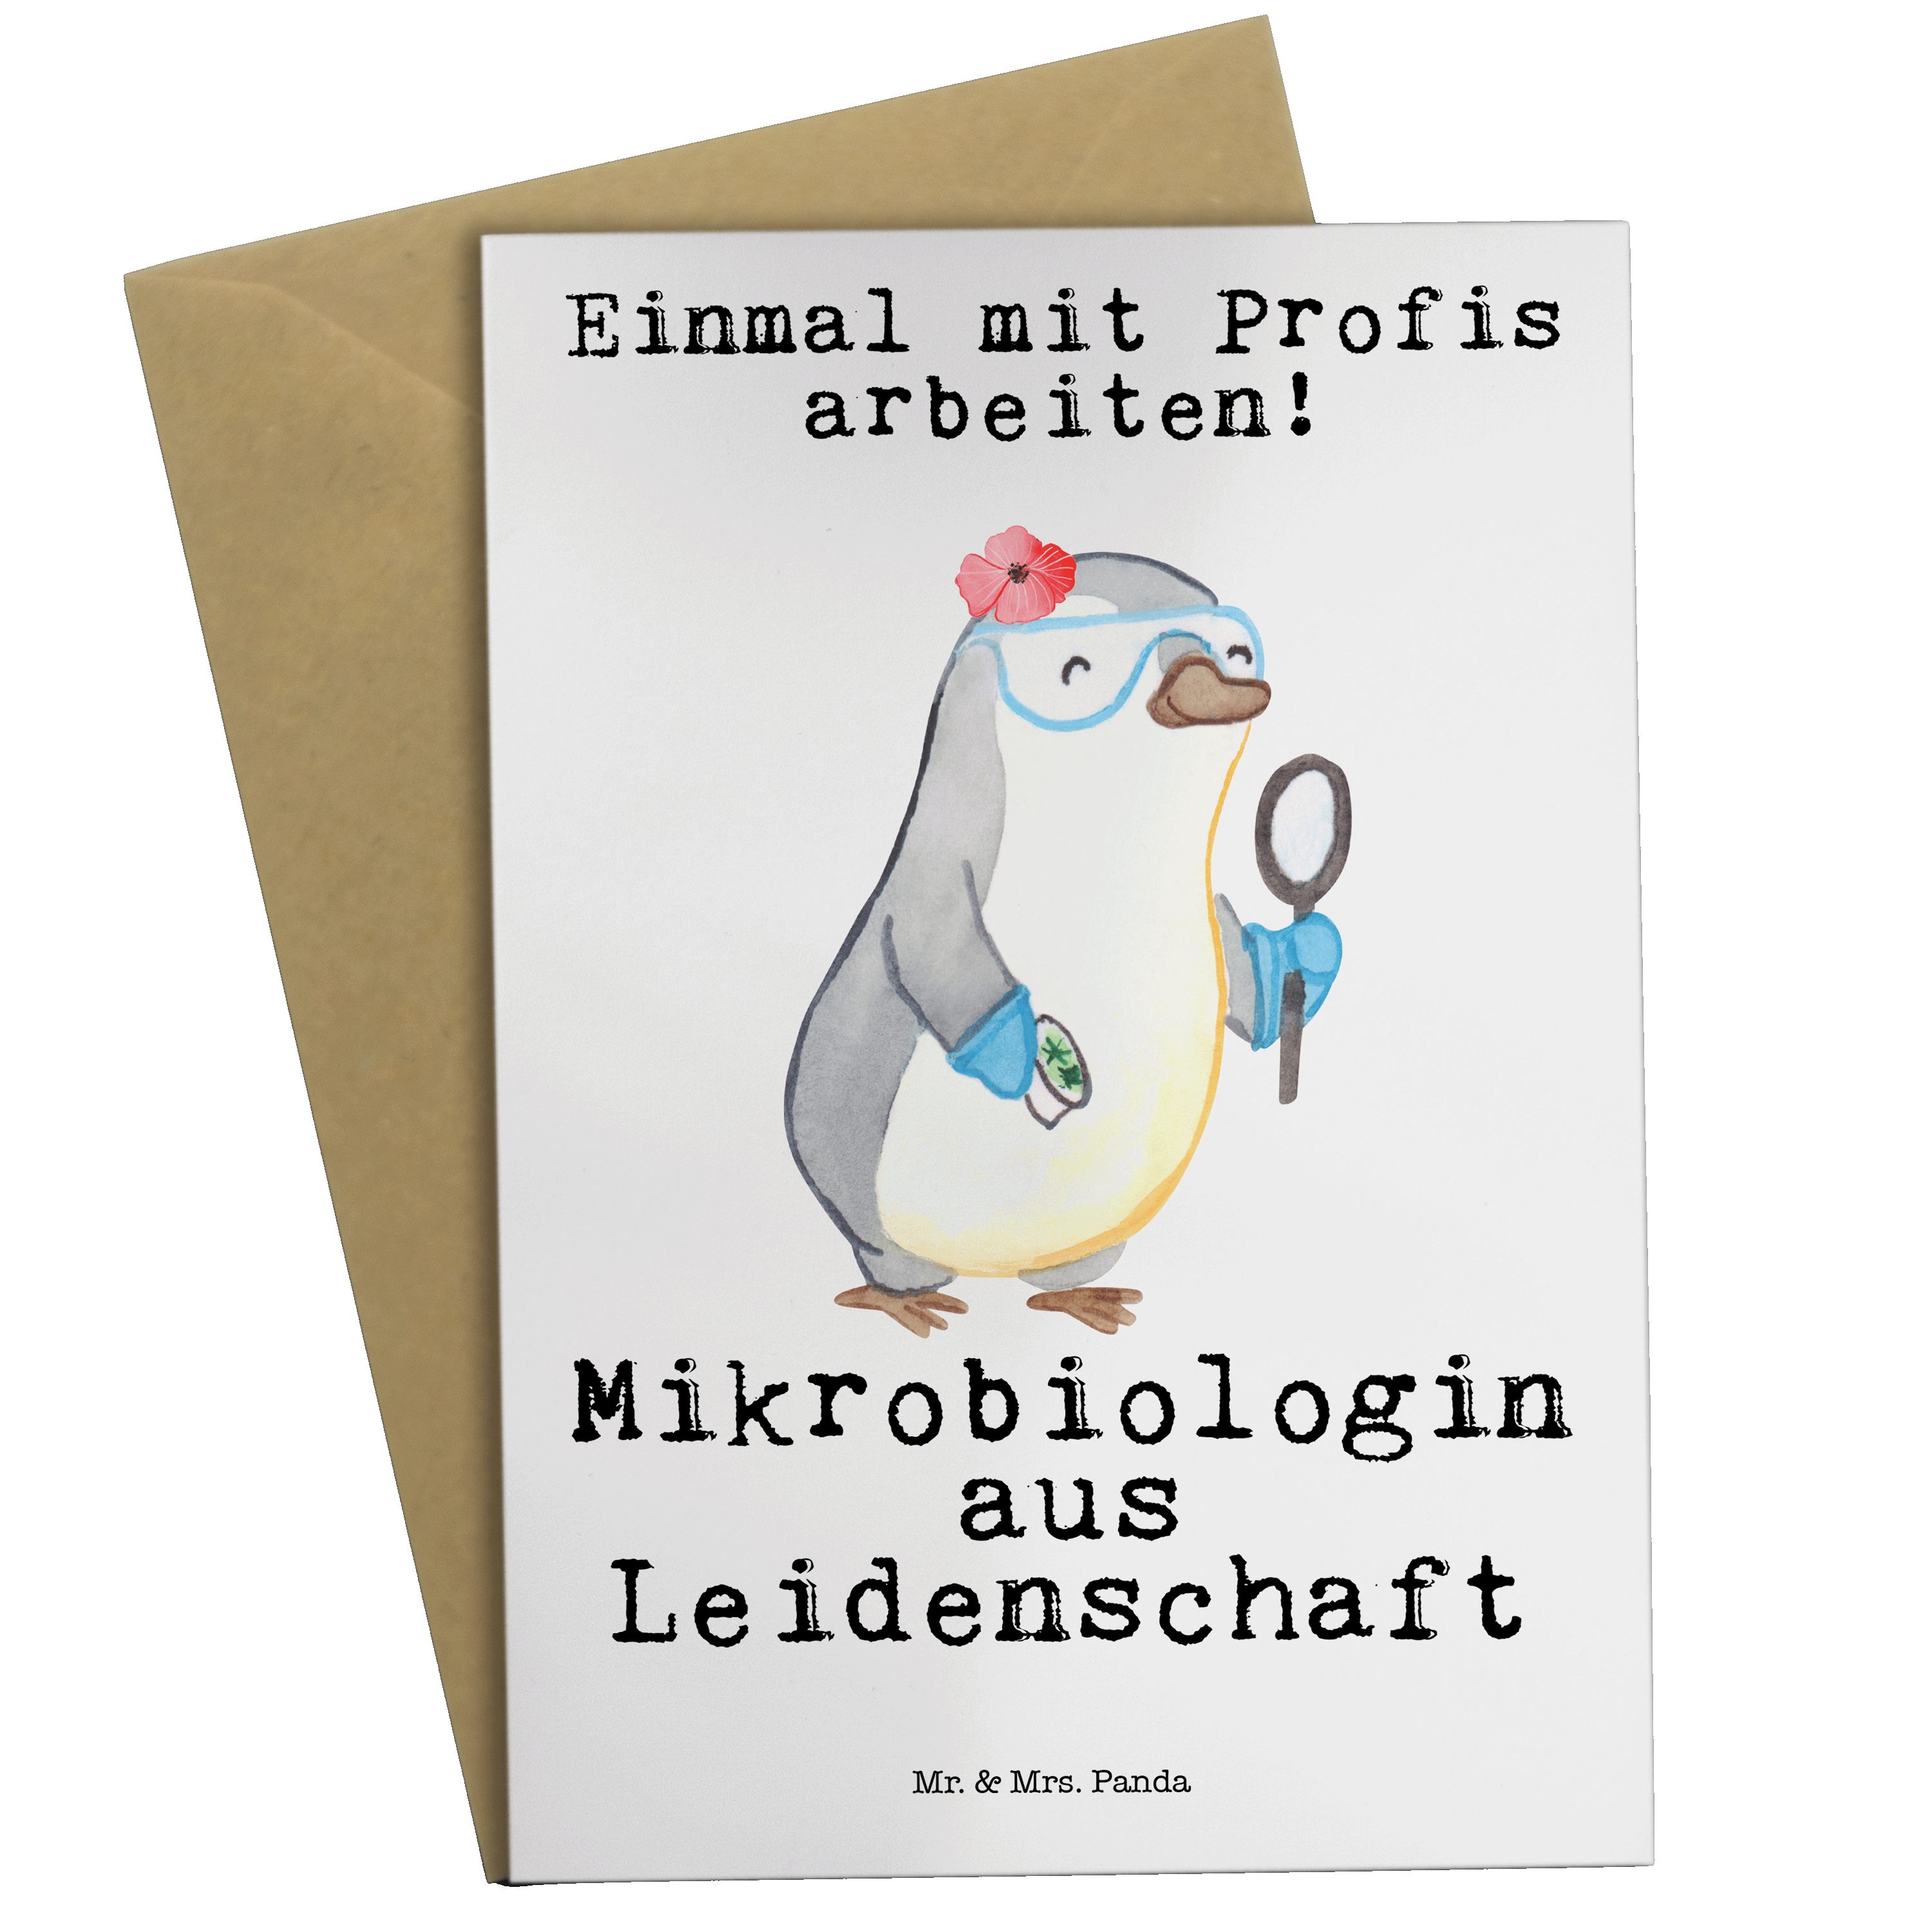 Mrs. Panda - Mr. Weiß Geschenk, & Labor, aus Mikrobiologin - Forsc Firma, Grußkarte Leidenschaft